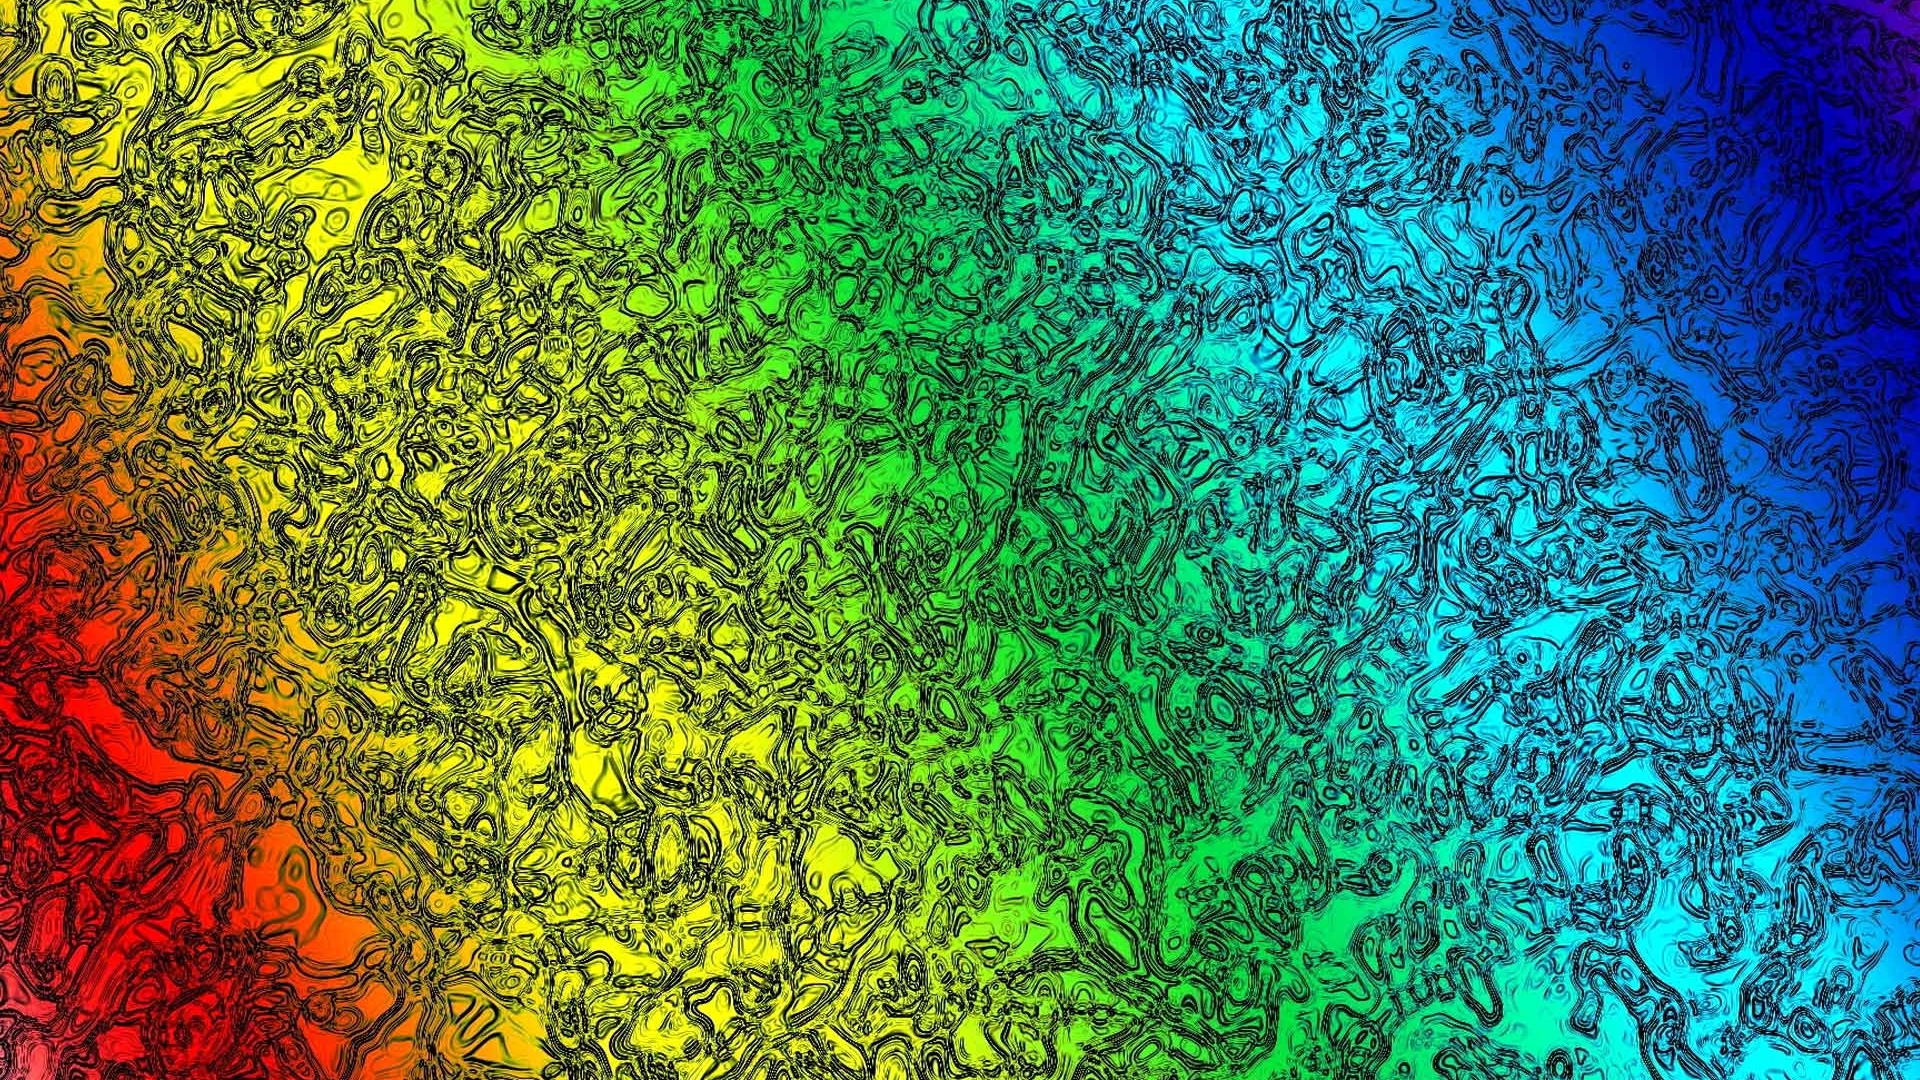 Abstract Rainbow Desktop Wallpaper 63036 1920x1080px